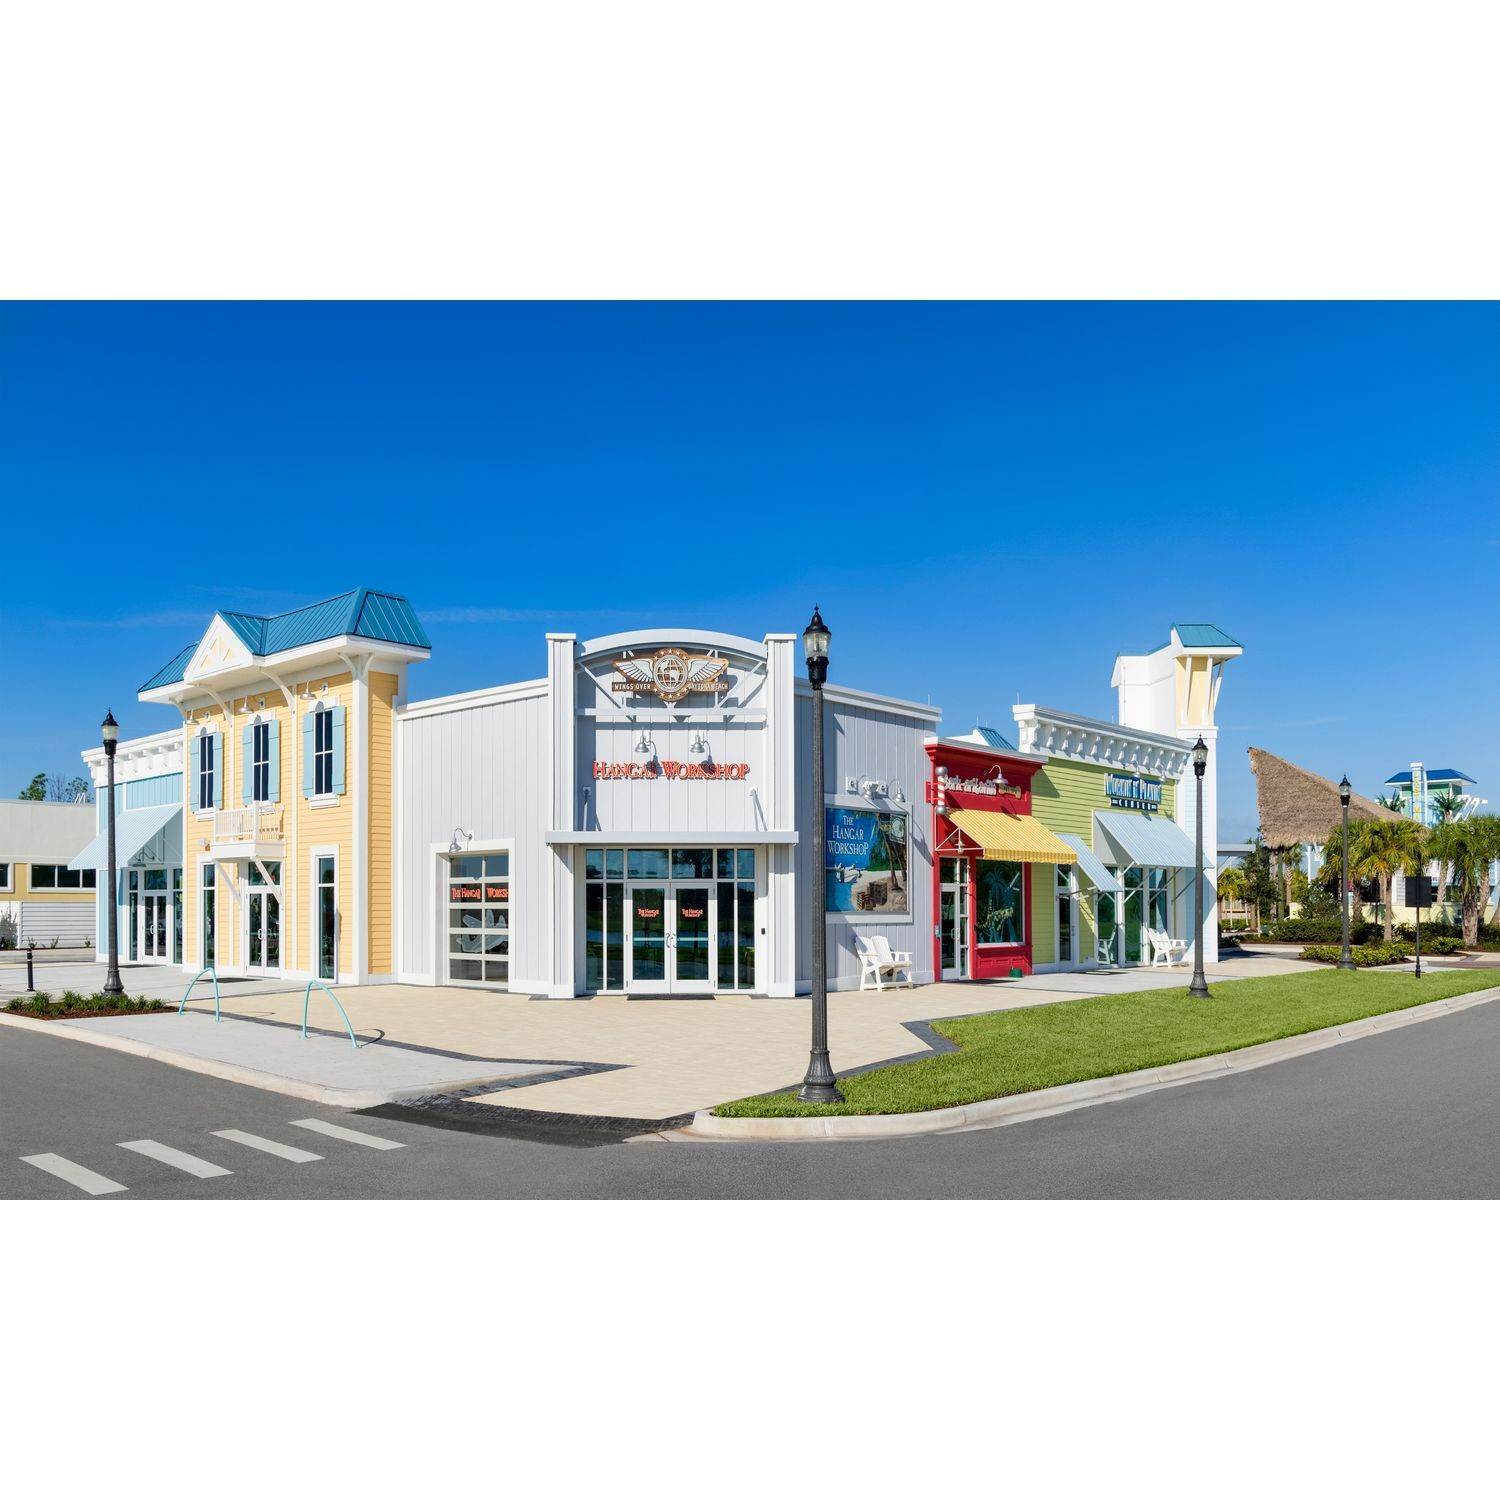 8. Latitude Margaritaville Daytona Beach building at 2400 Lpga Boulevard, Daytona Beach, FL 32124